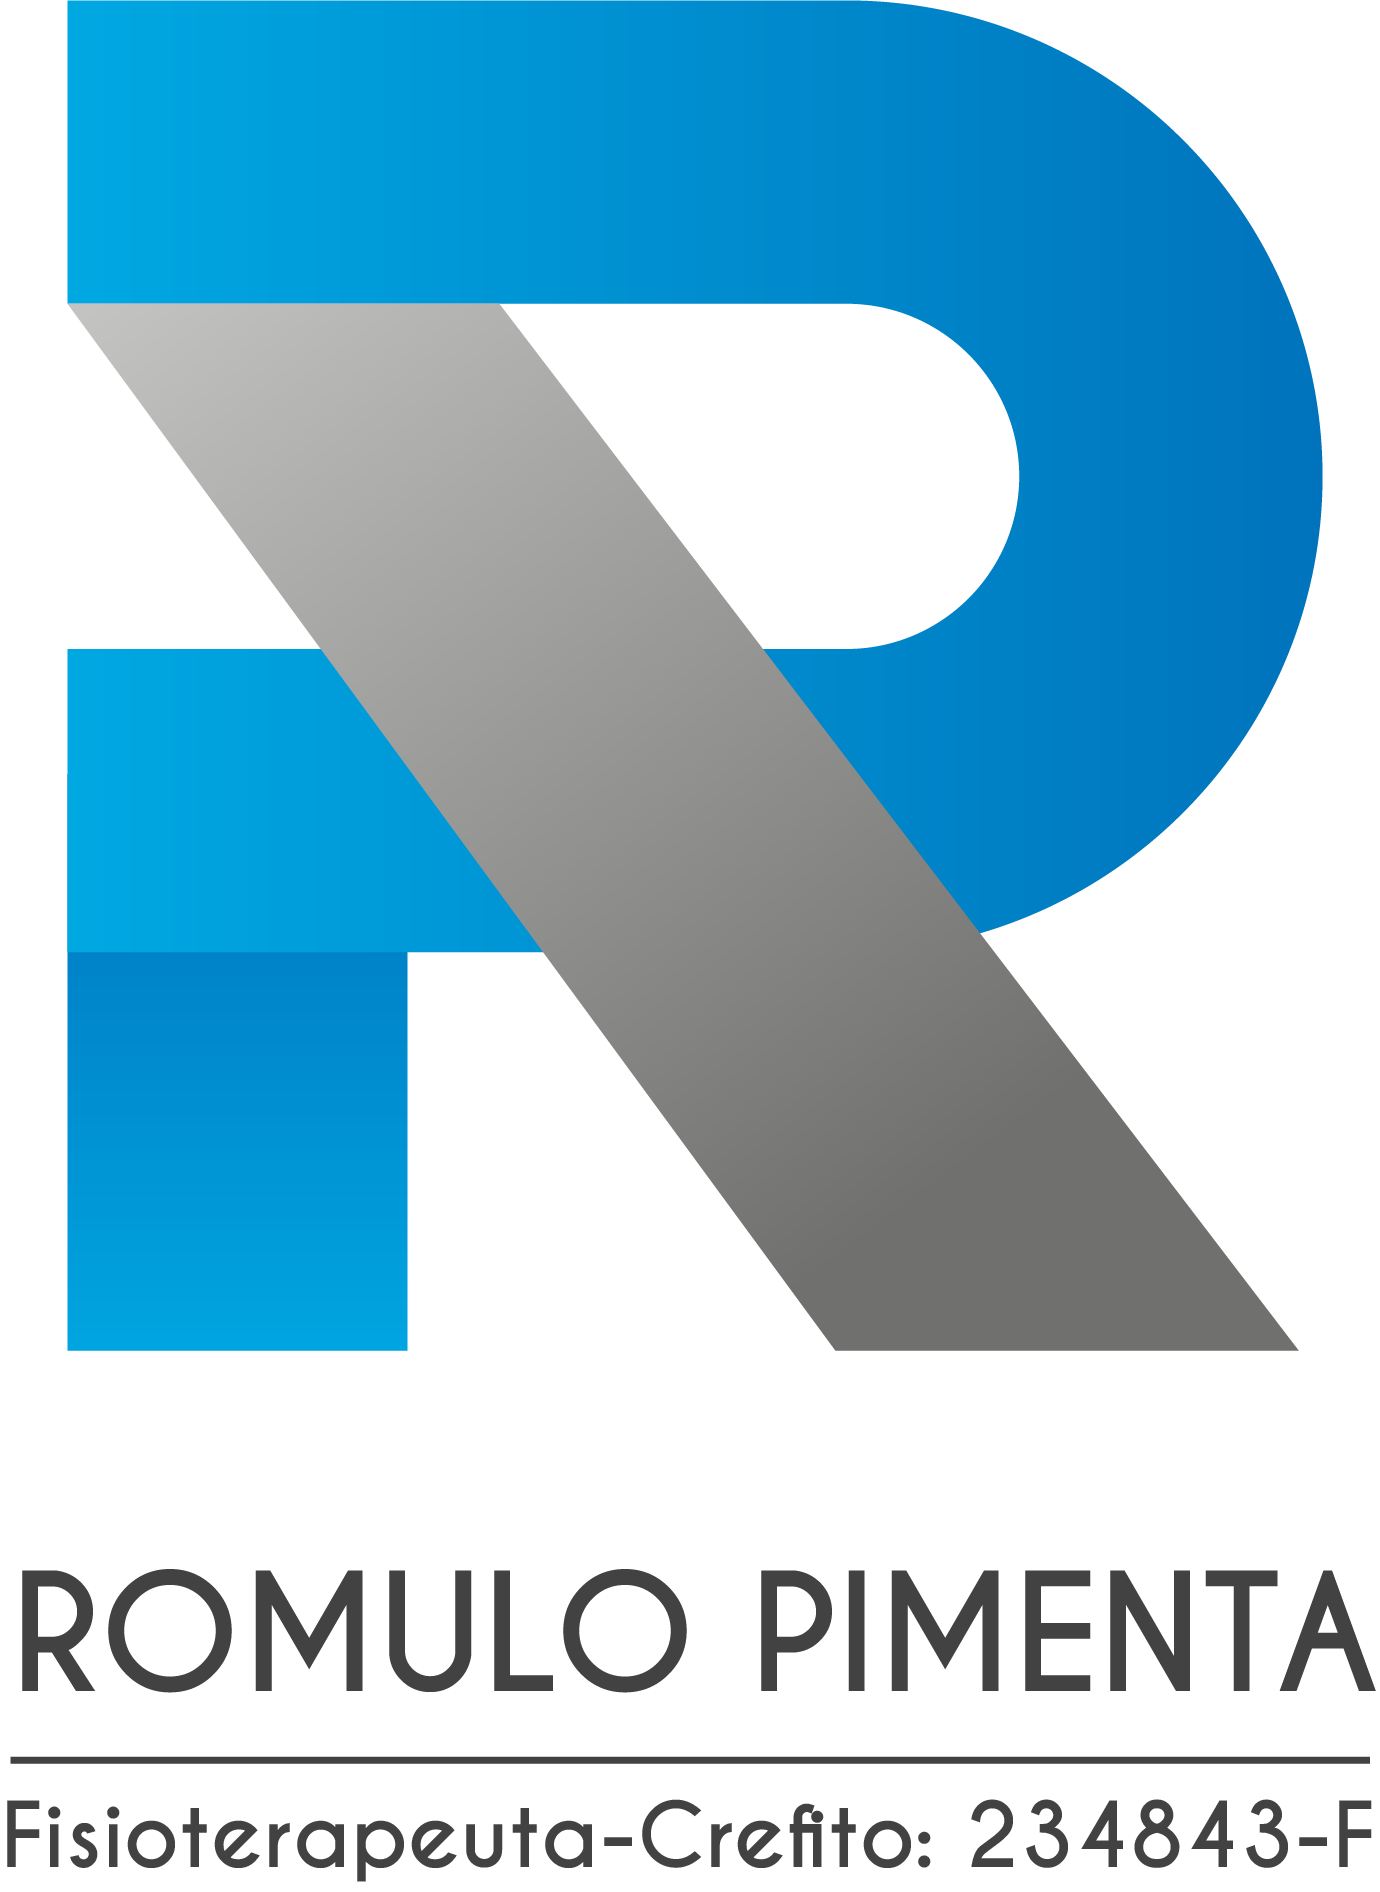 Romulo Pimenta - Fisioterapeuta